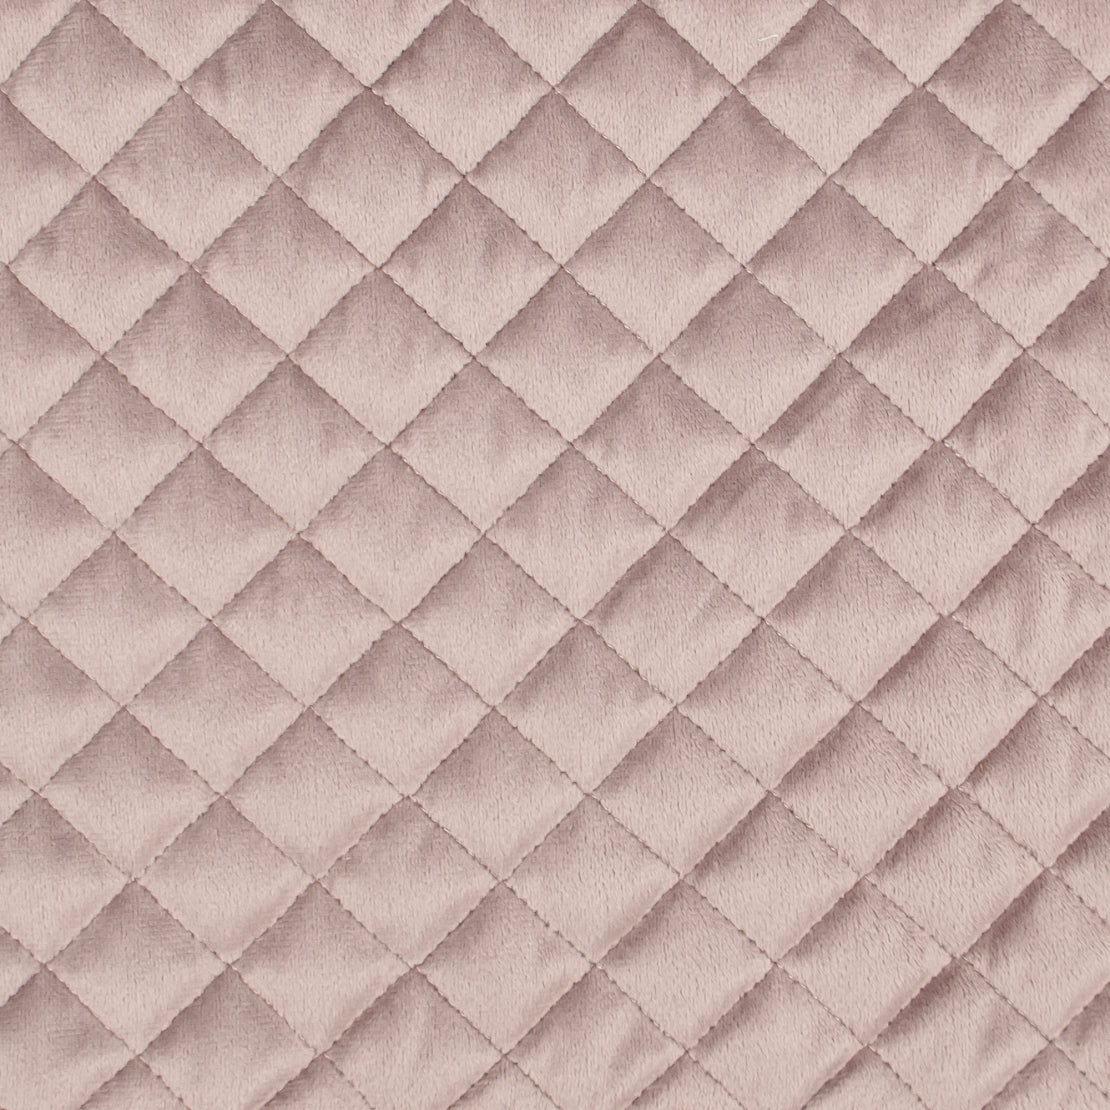 Velvet quilted fabric